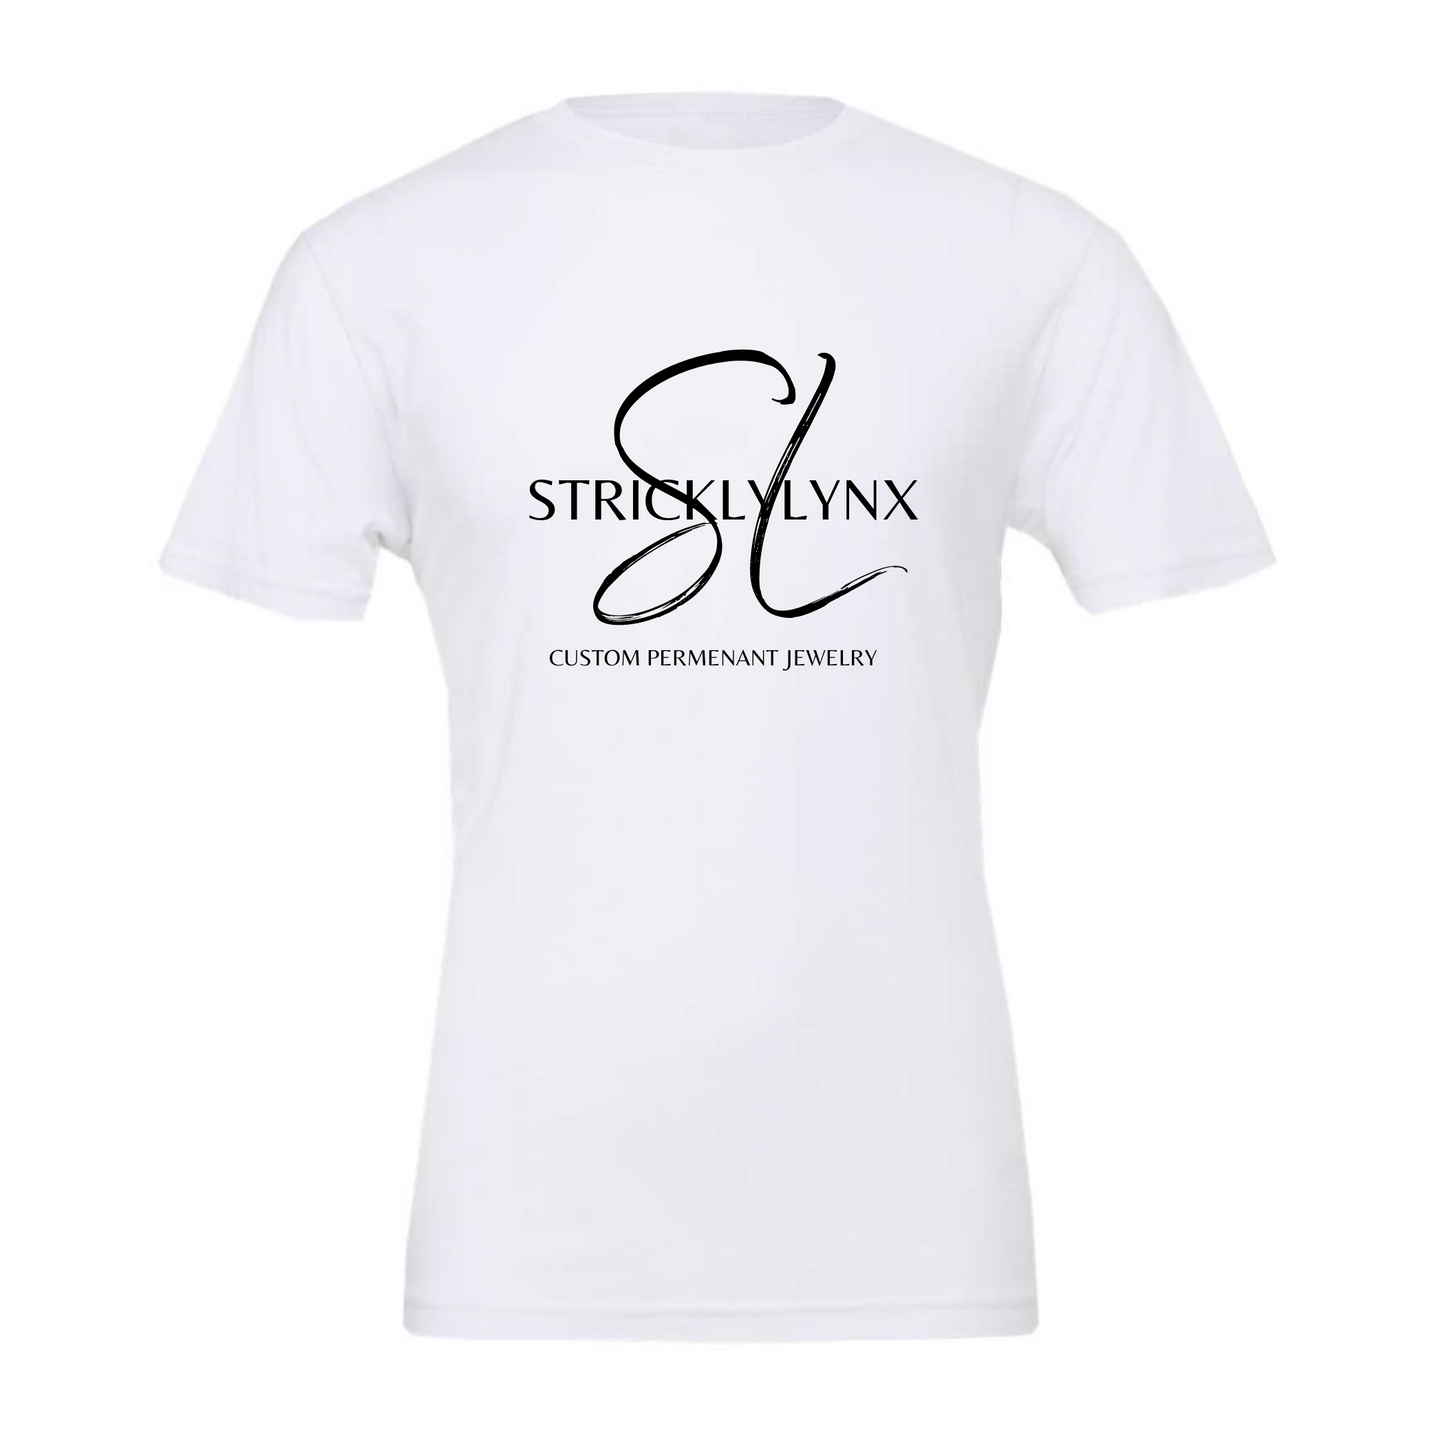 Stricklylynx T-Shirt 1